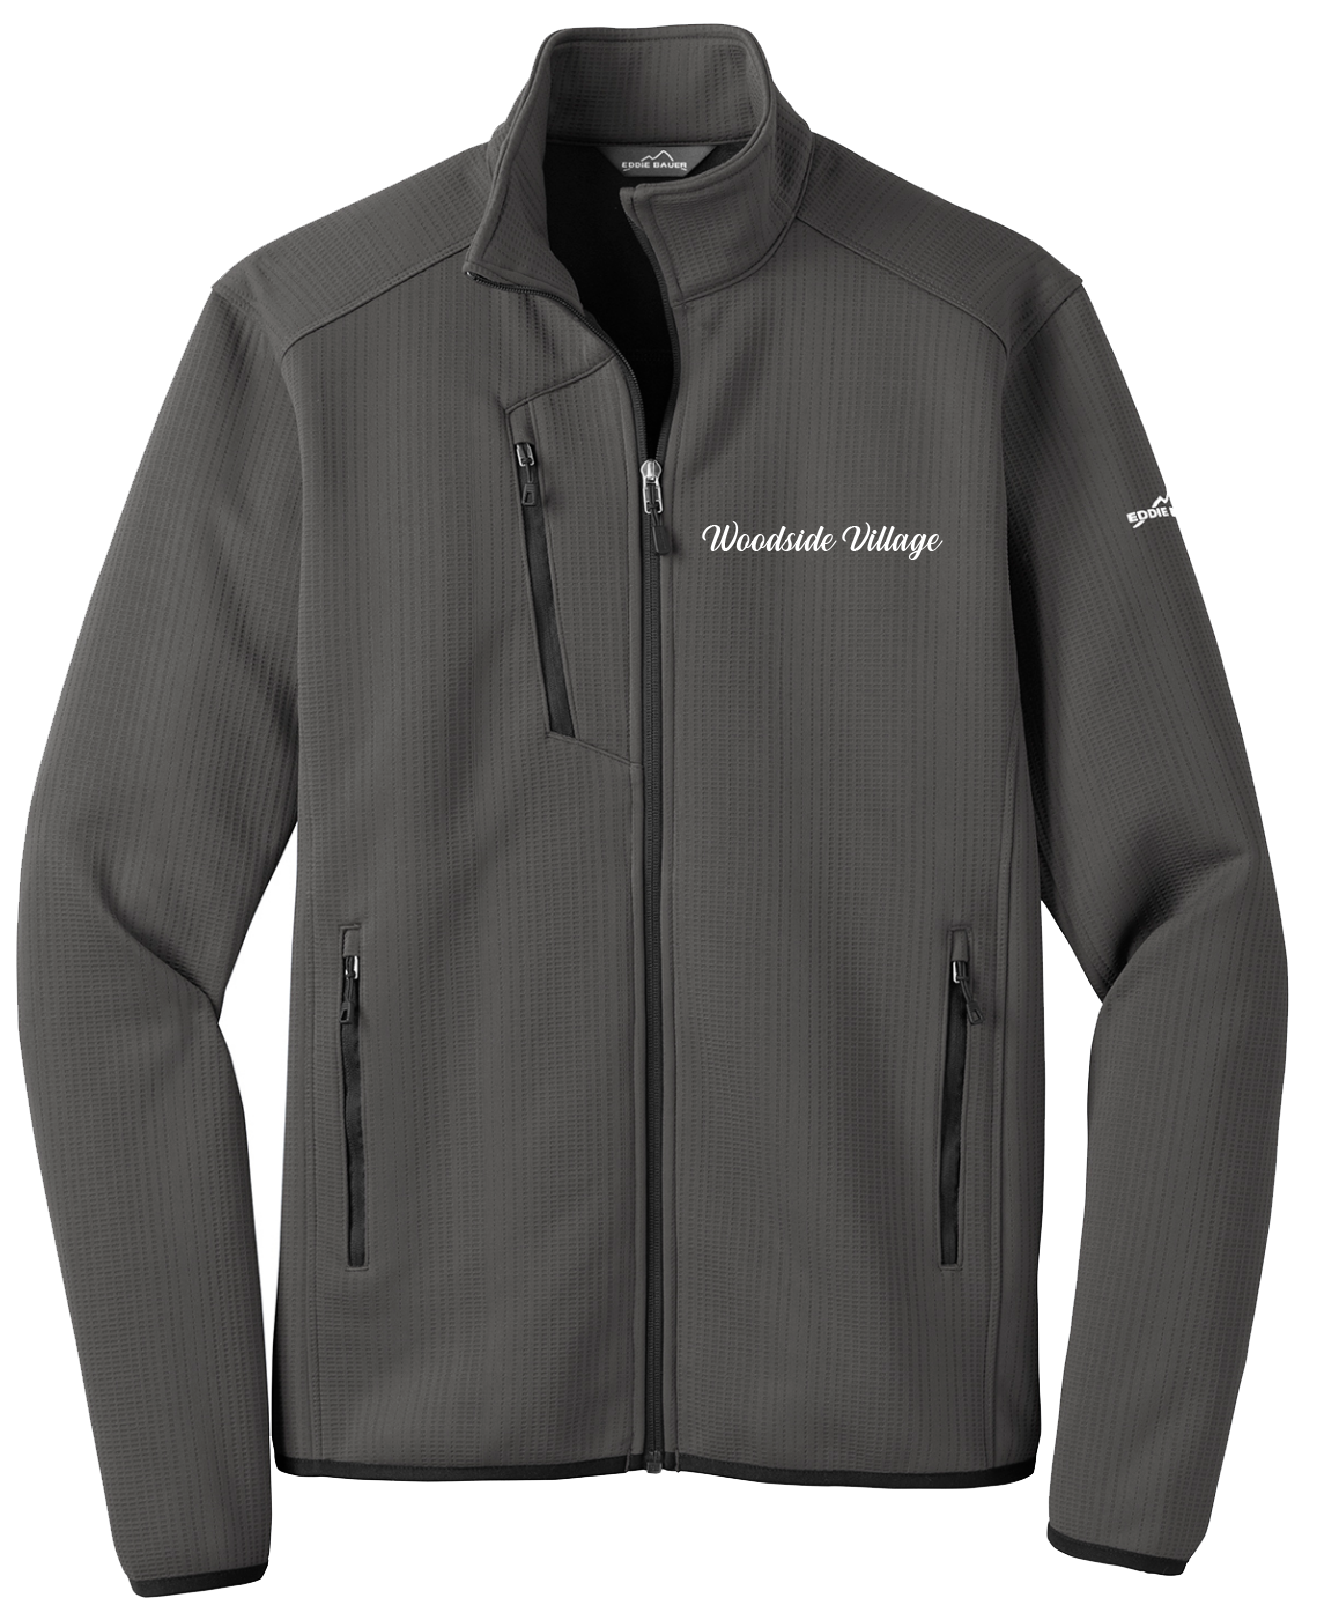 Woodside Village - Mens - Eddie Bauer ® Dash Full-Zip Fleece Jacket